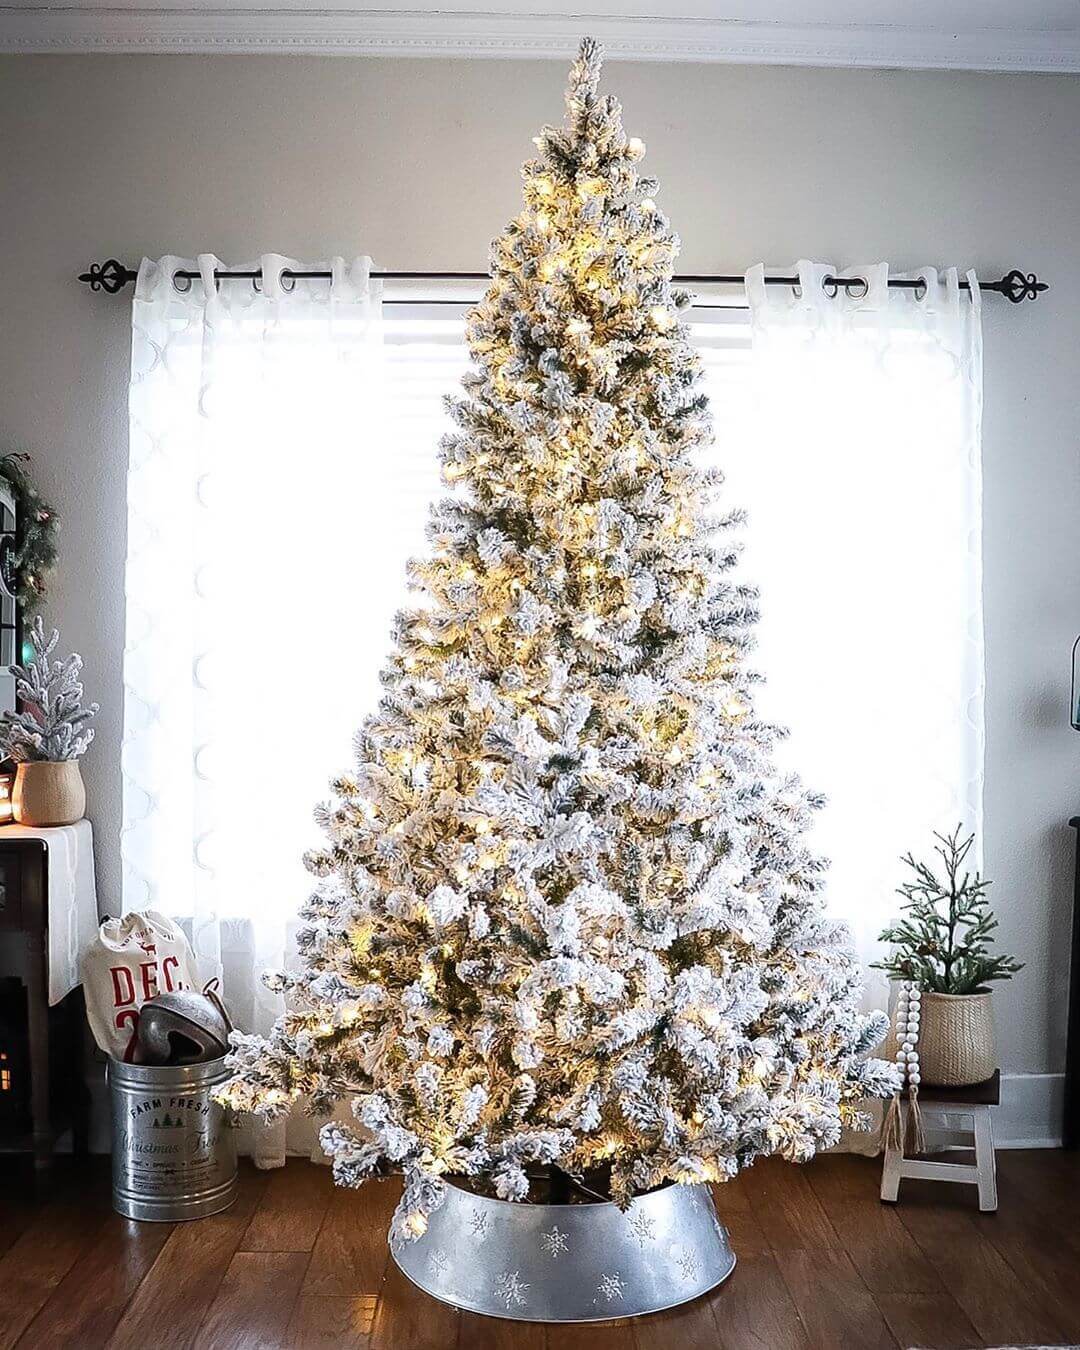 King of Christmas 9' Prince Flock® Artificial Christmas Tree with 650 Warm White LED Lights